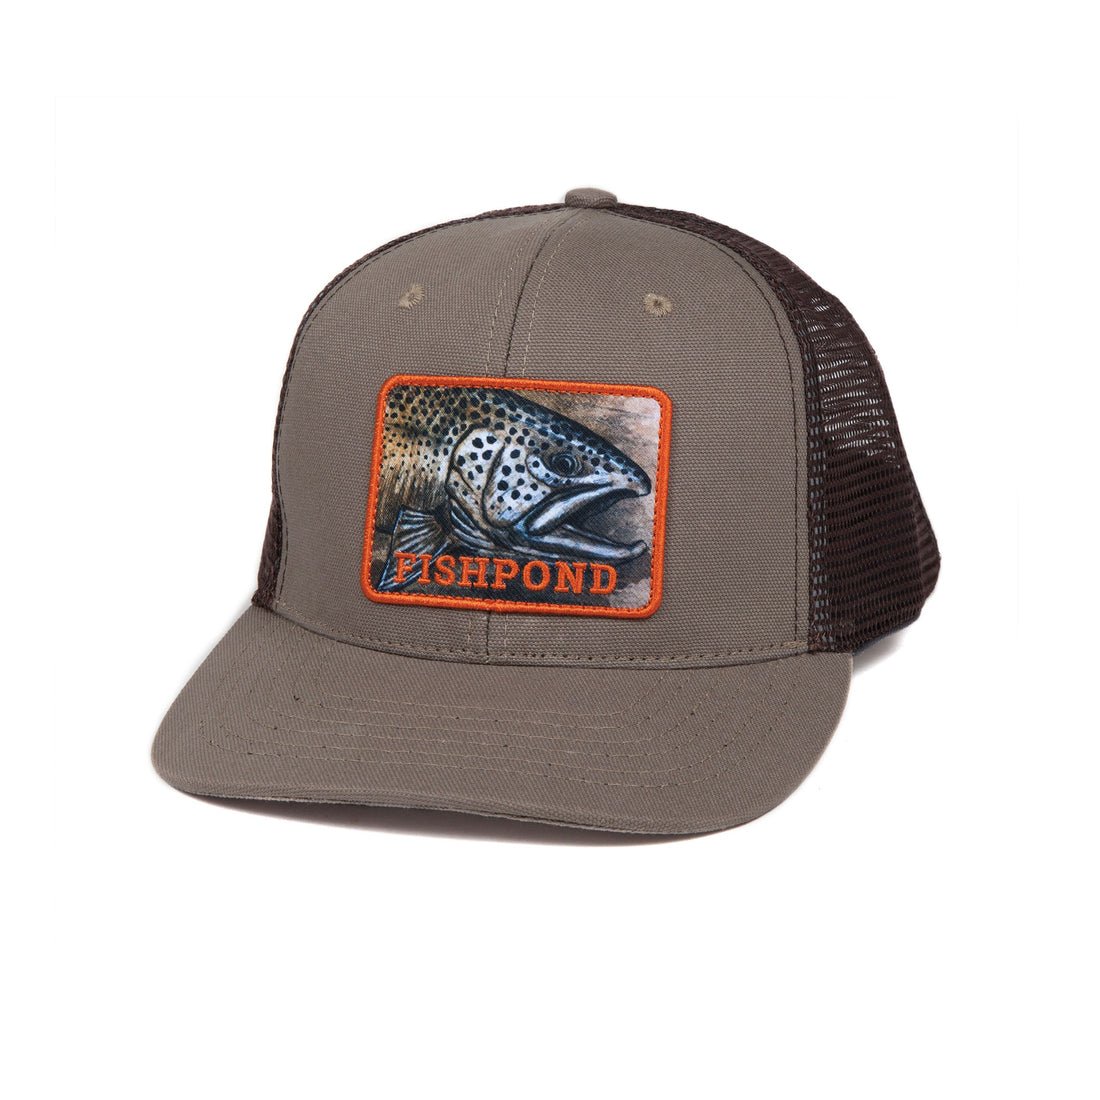 Fishpond - Slab Trucker Hat